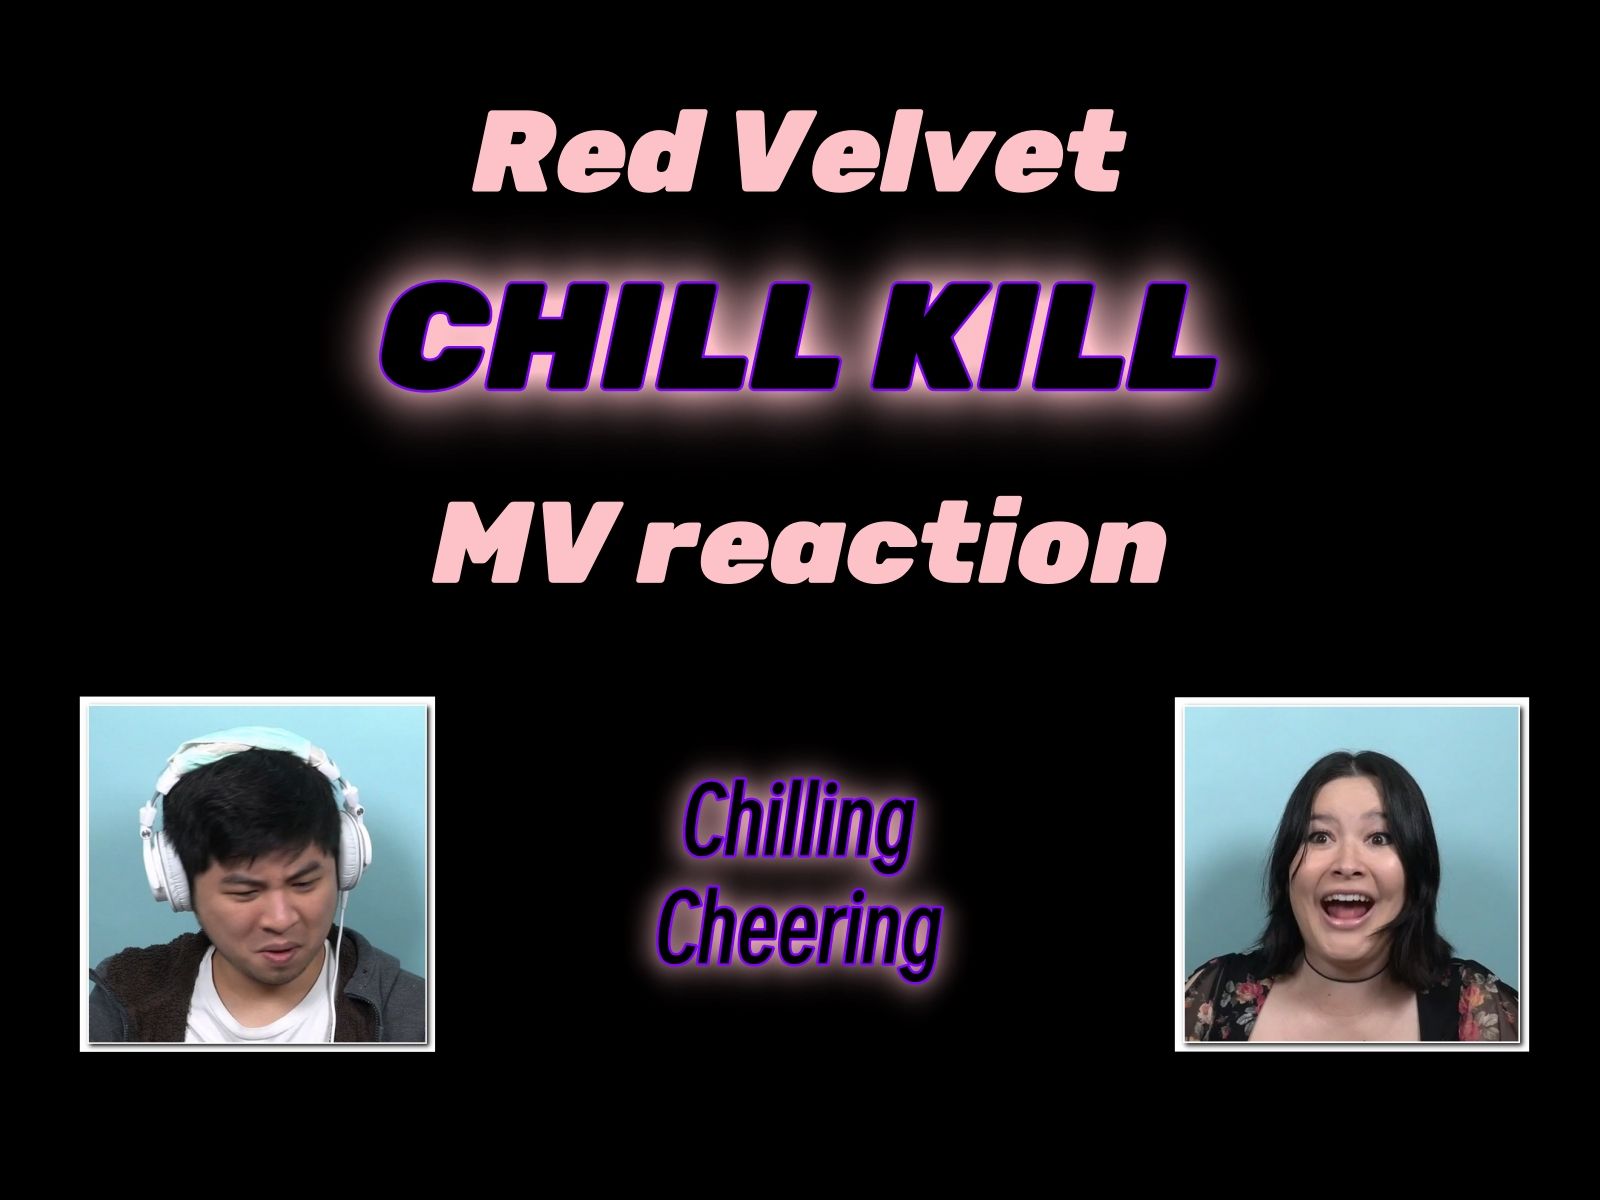 【中字】古典音乐人 Red Velvet 'CHILL KILL' MV reaction【ReacttotheK】